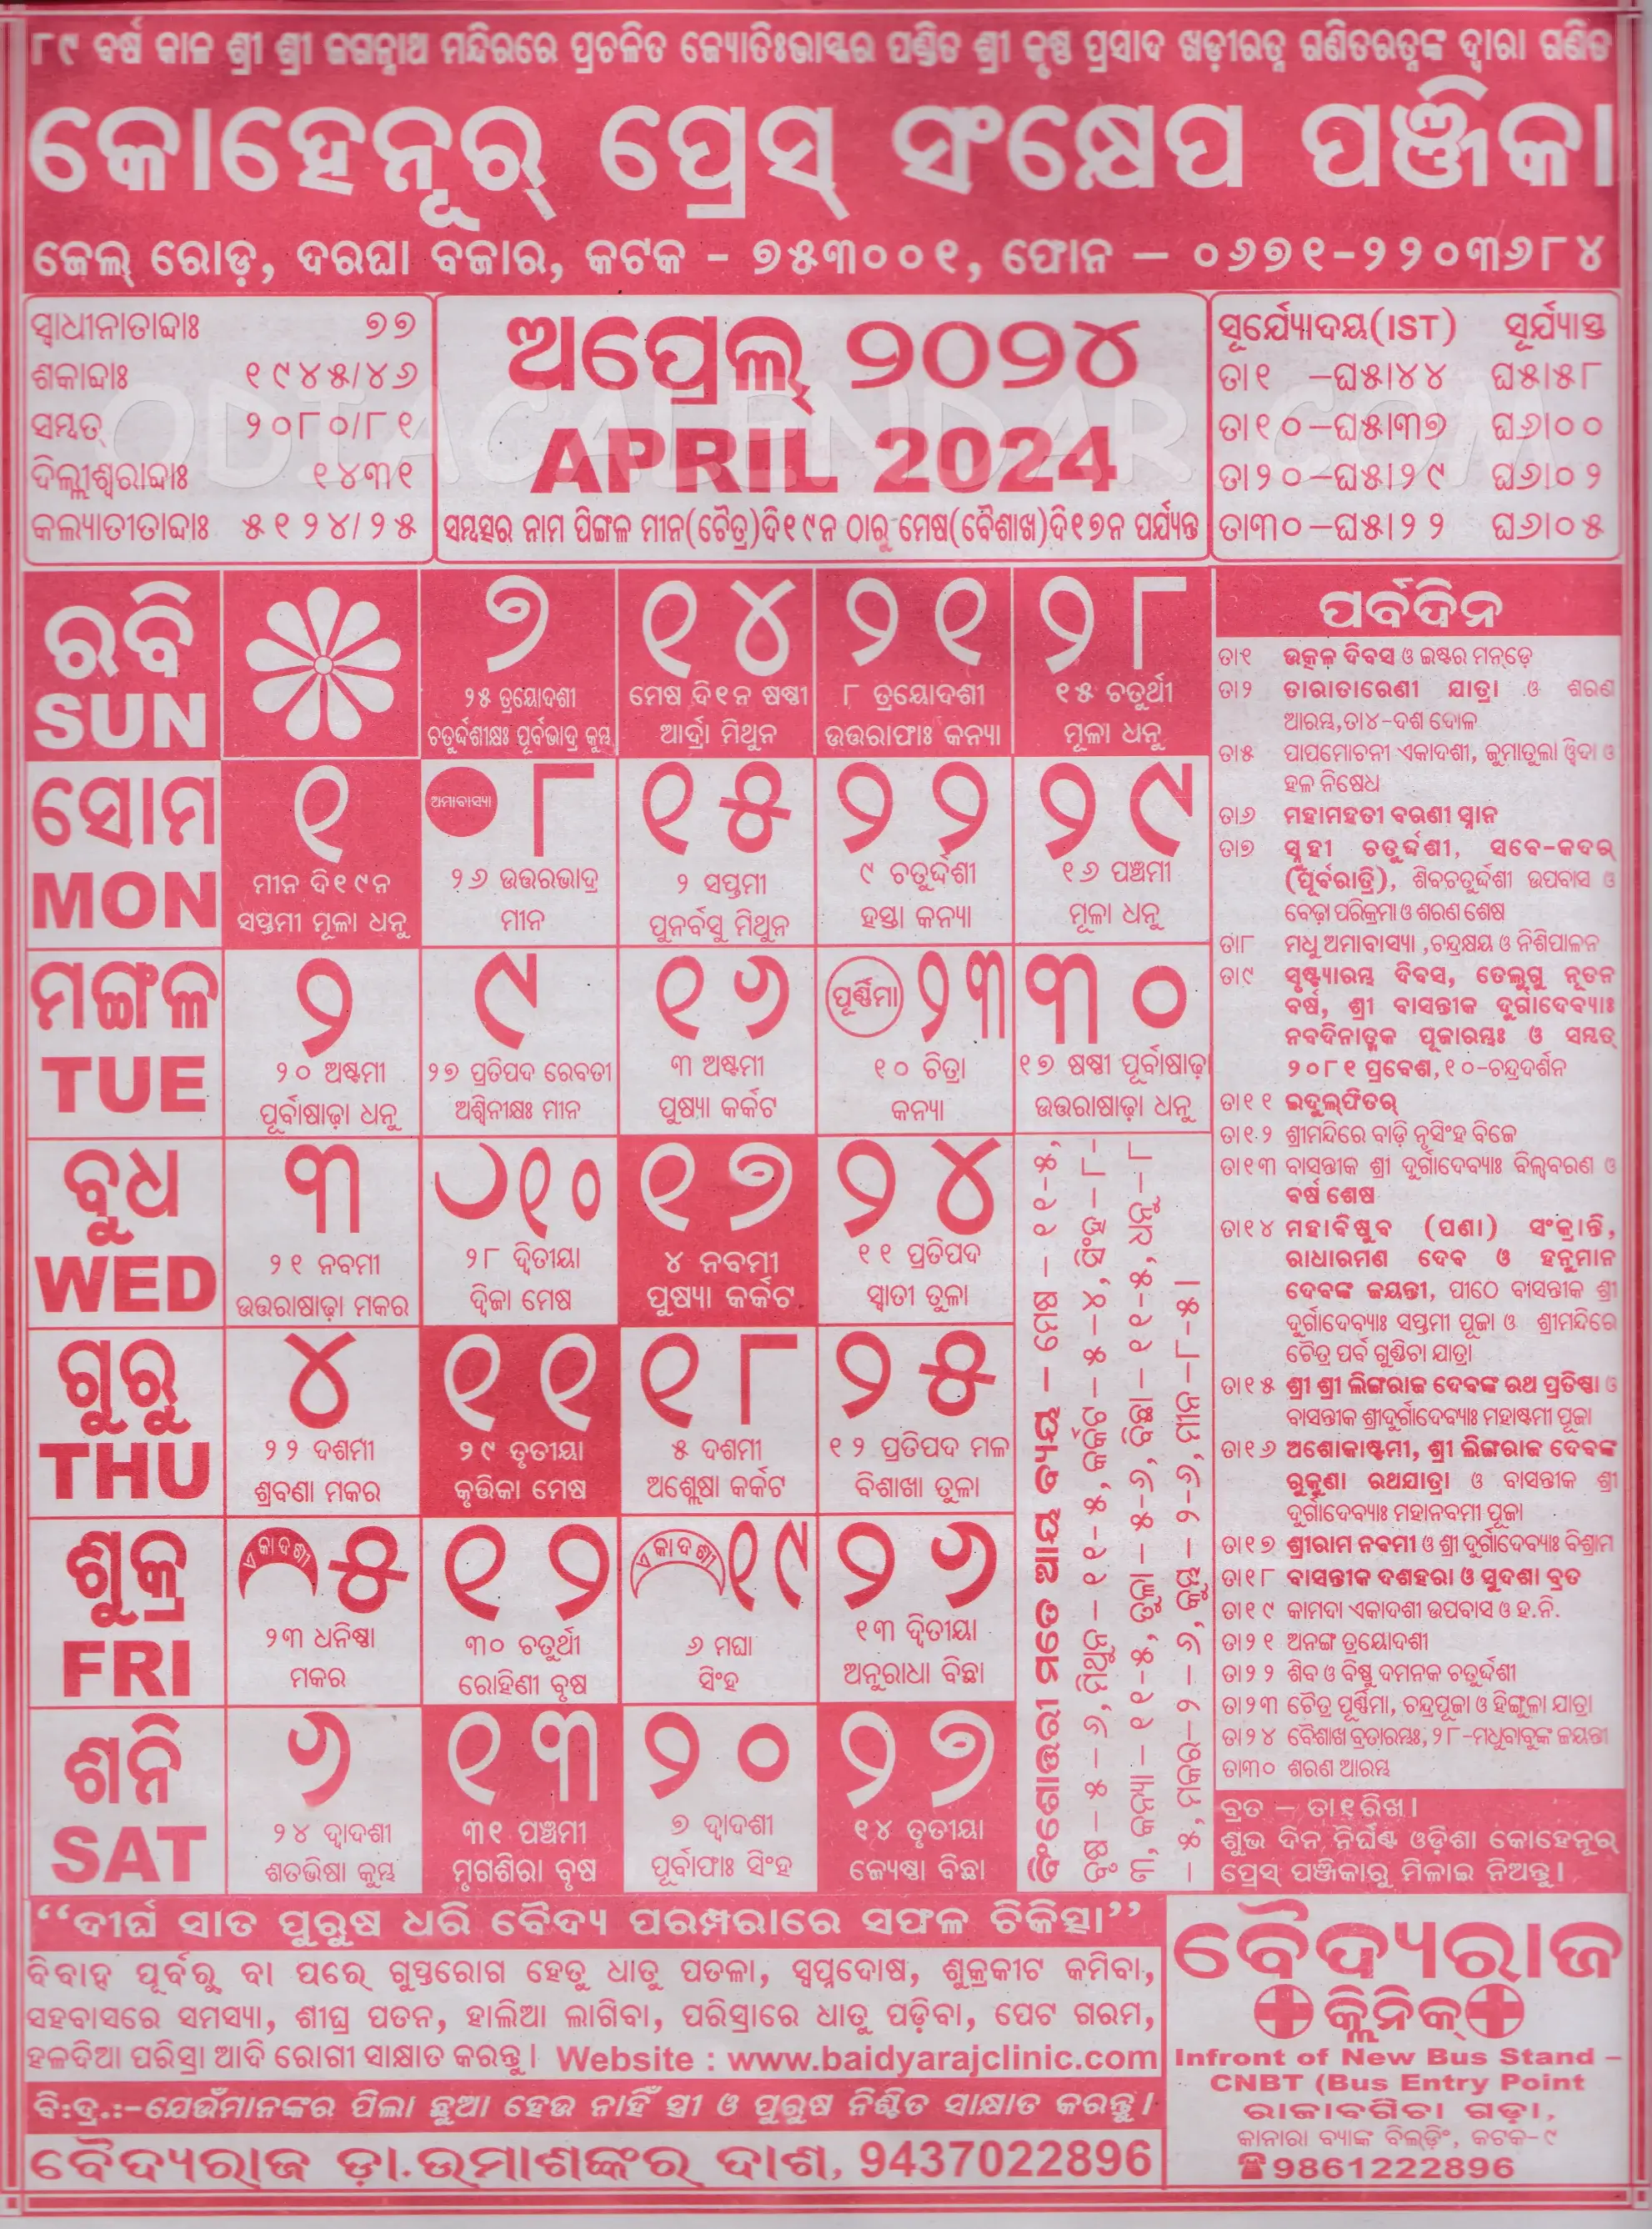 kohinoor calendar april 2024